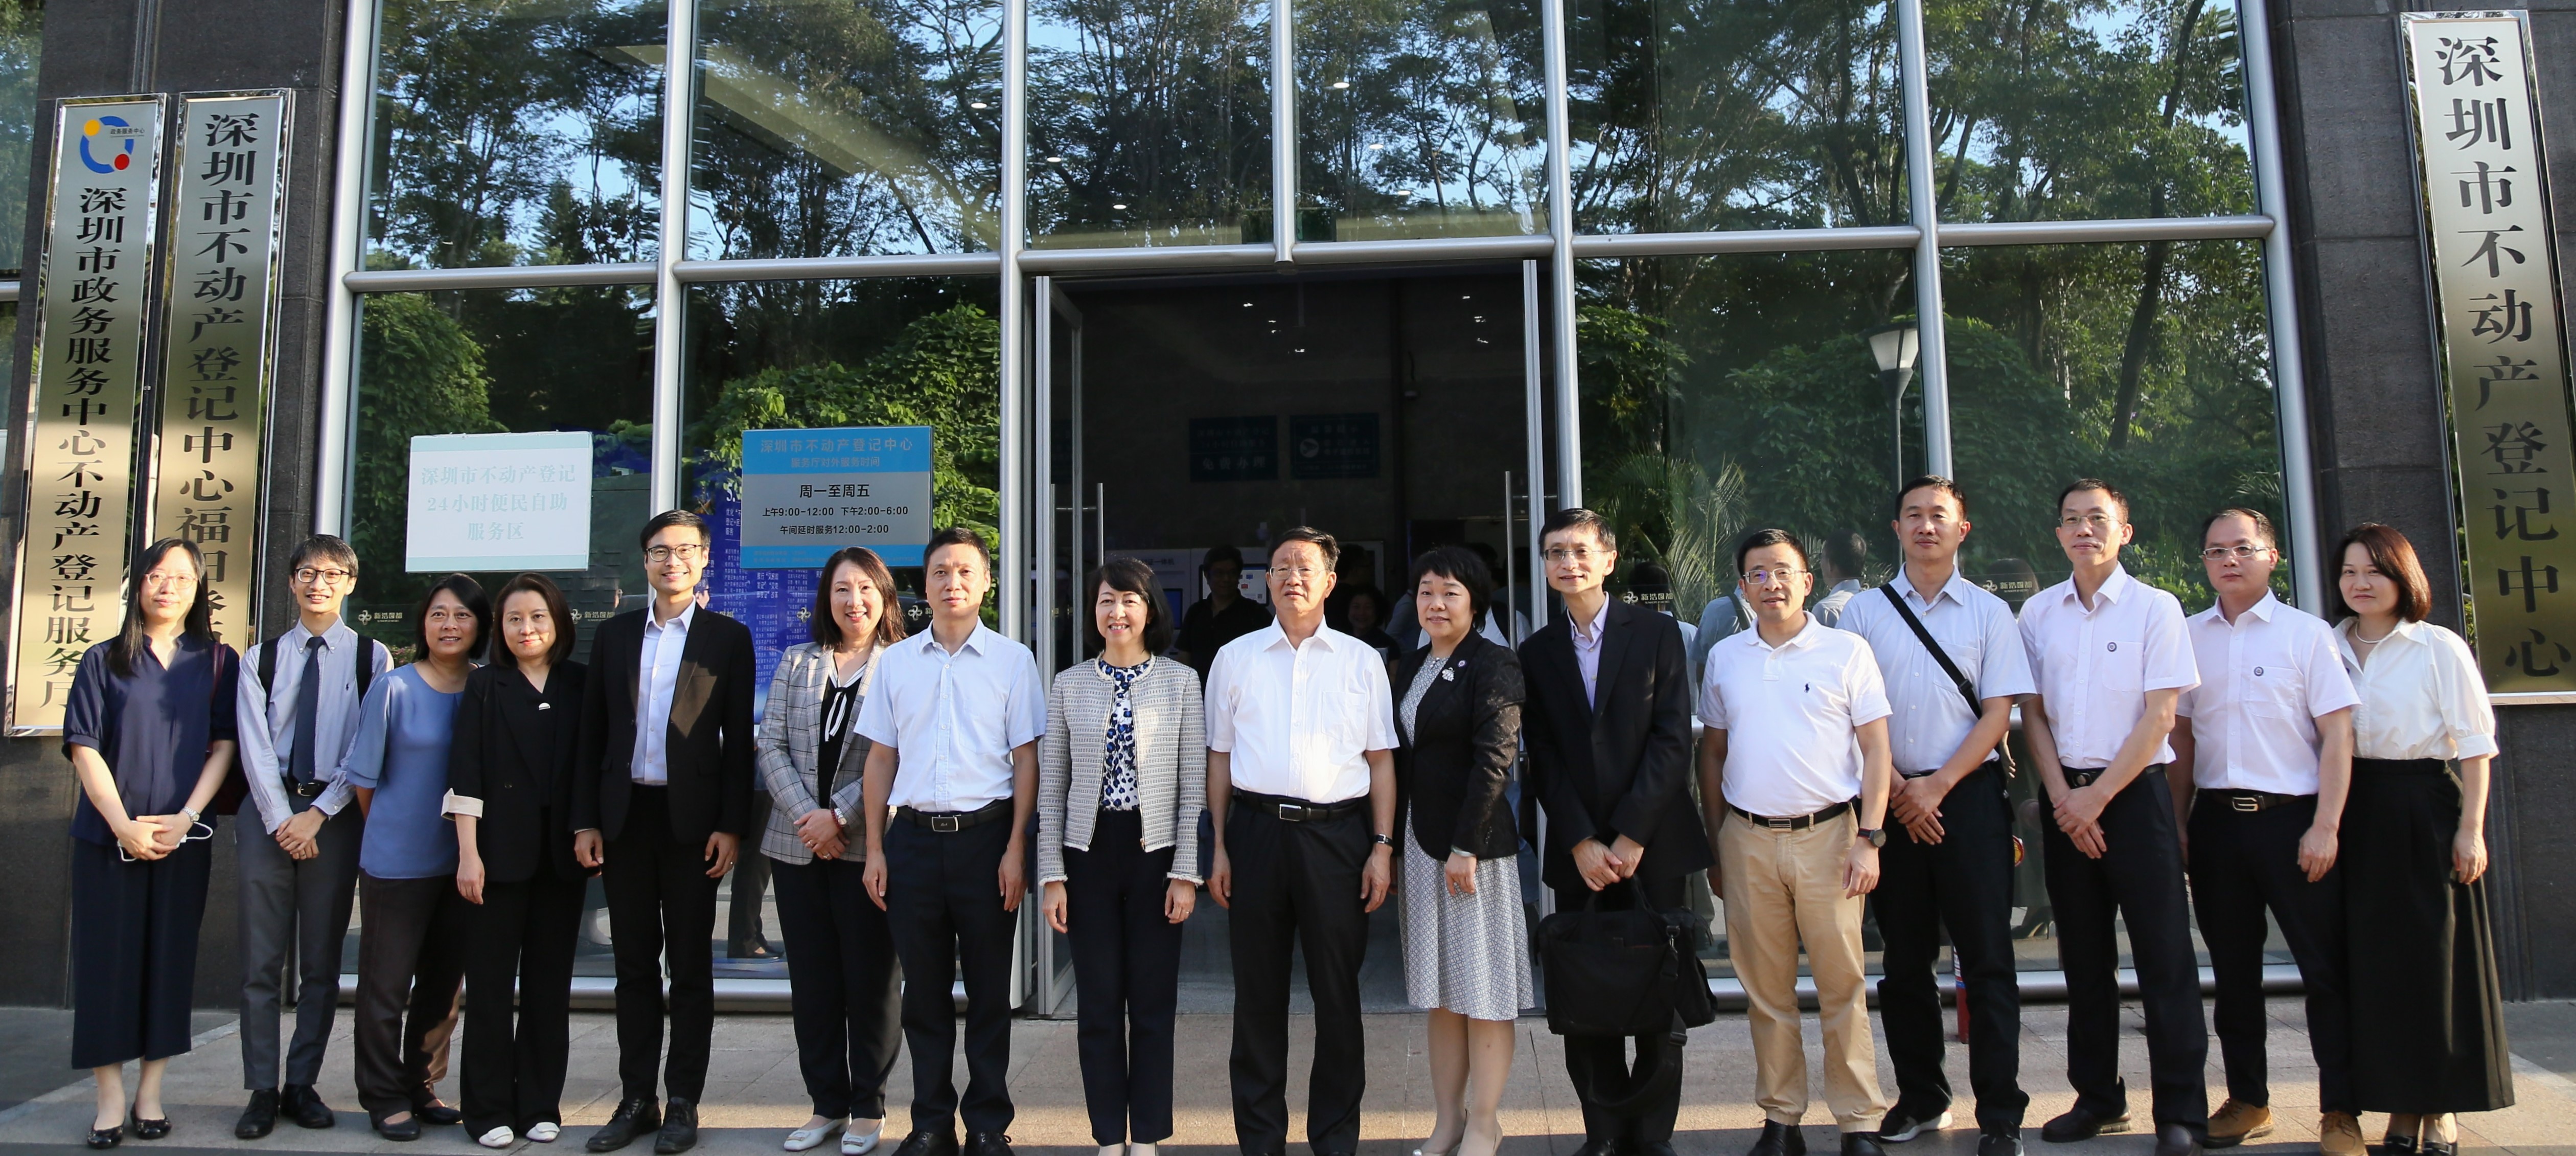 A delegation led by the Land Registrar, Ms Joyce TAM, JP (eighth from the left) visited the Shenzhen Real Estate Registration Center